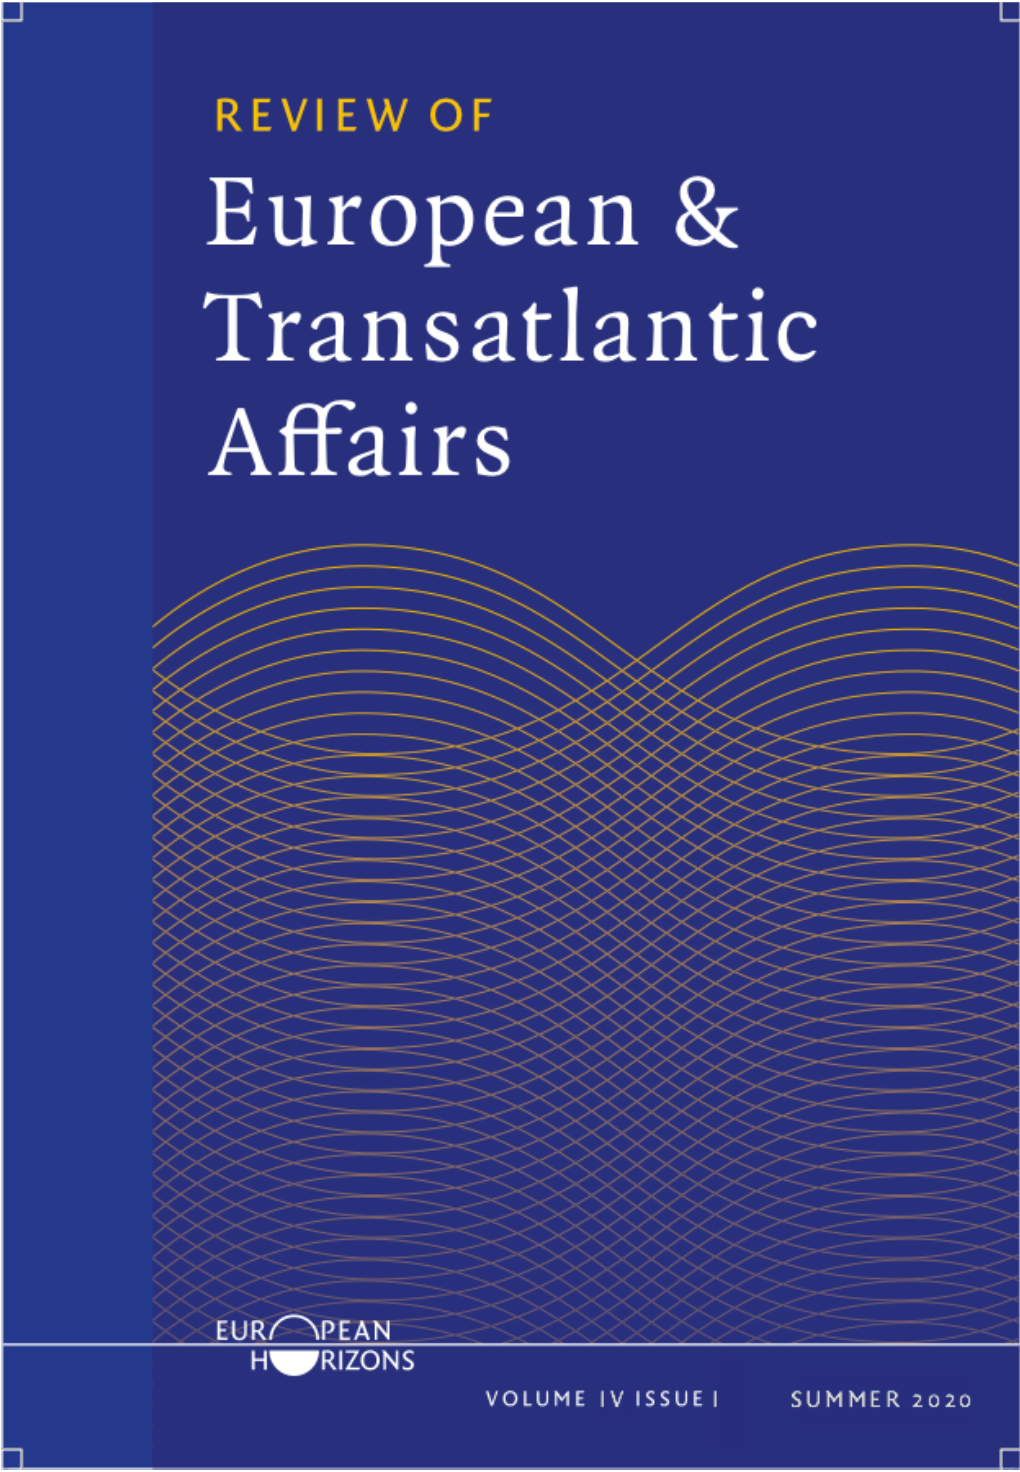 Review of European & Transatlantic A¬Airs